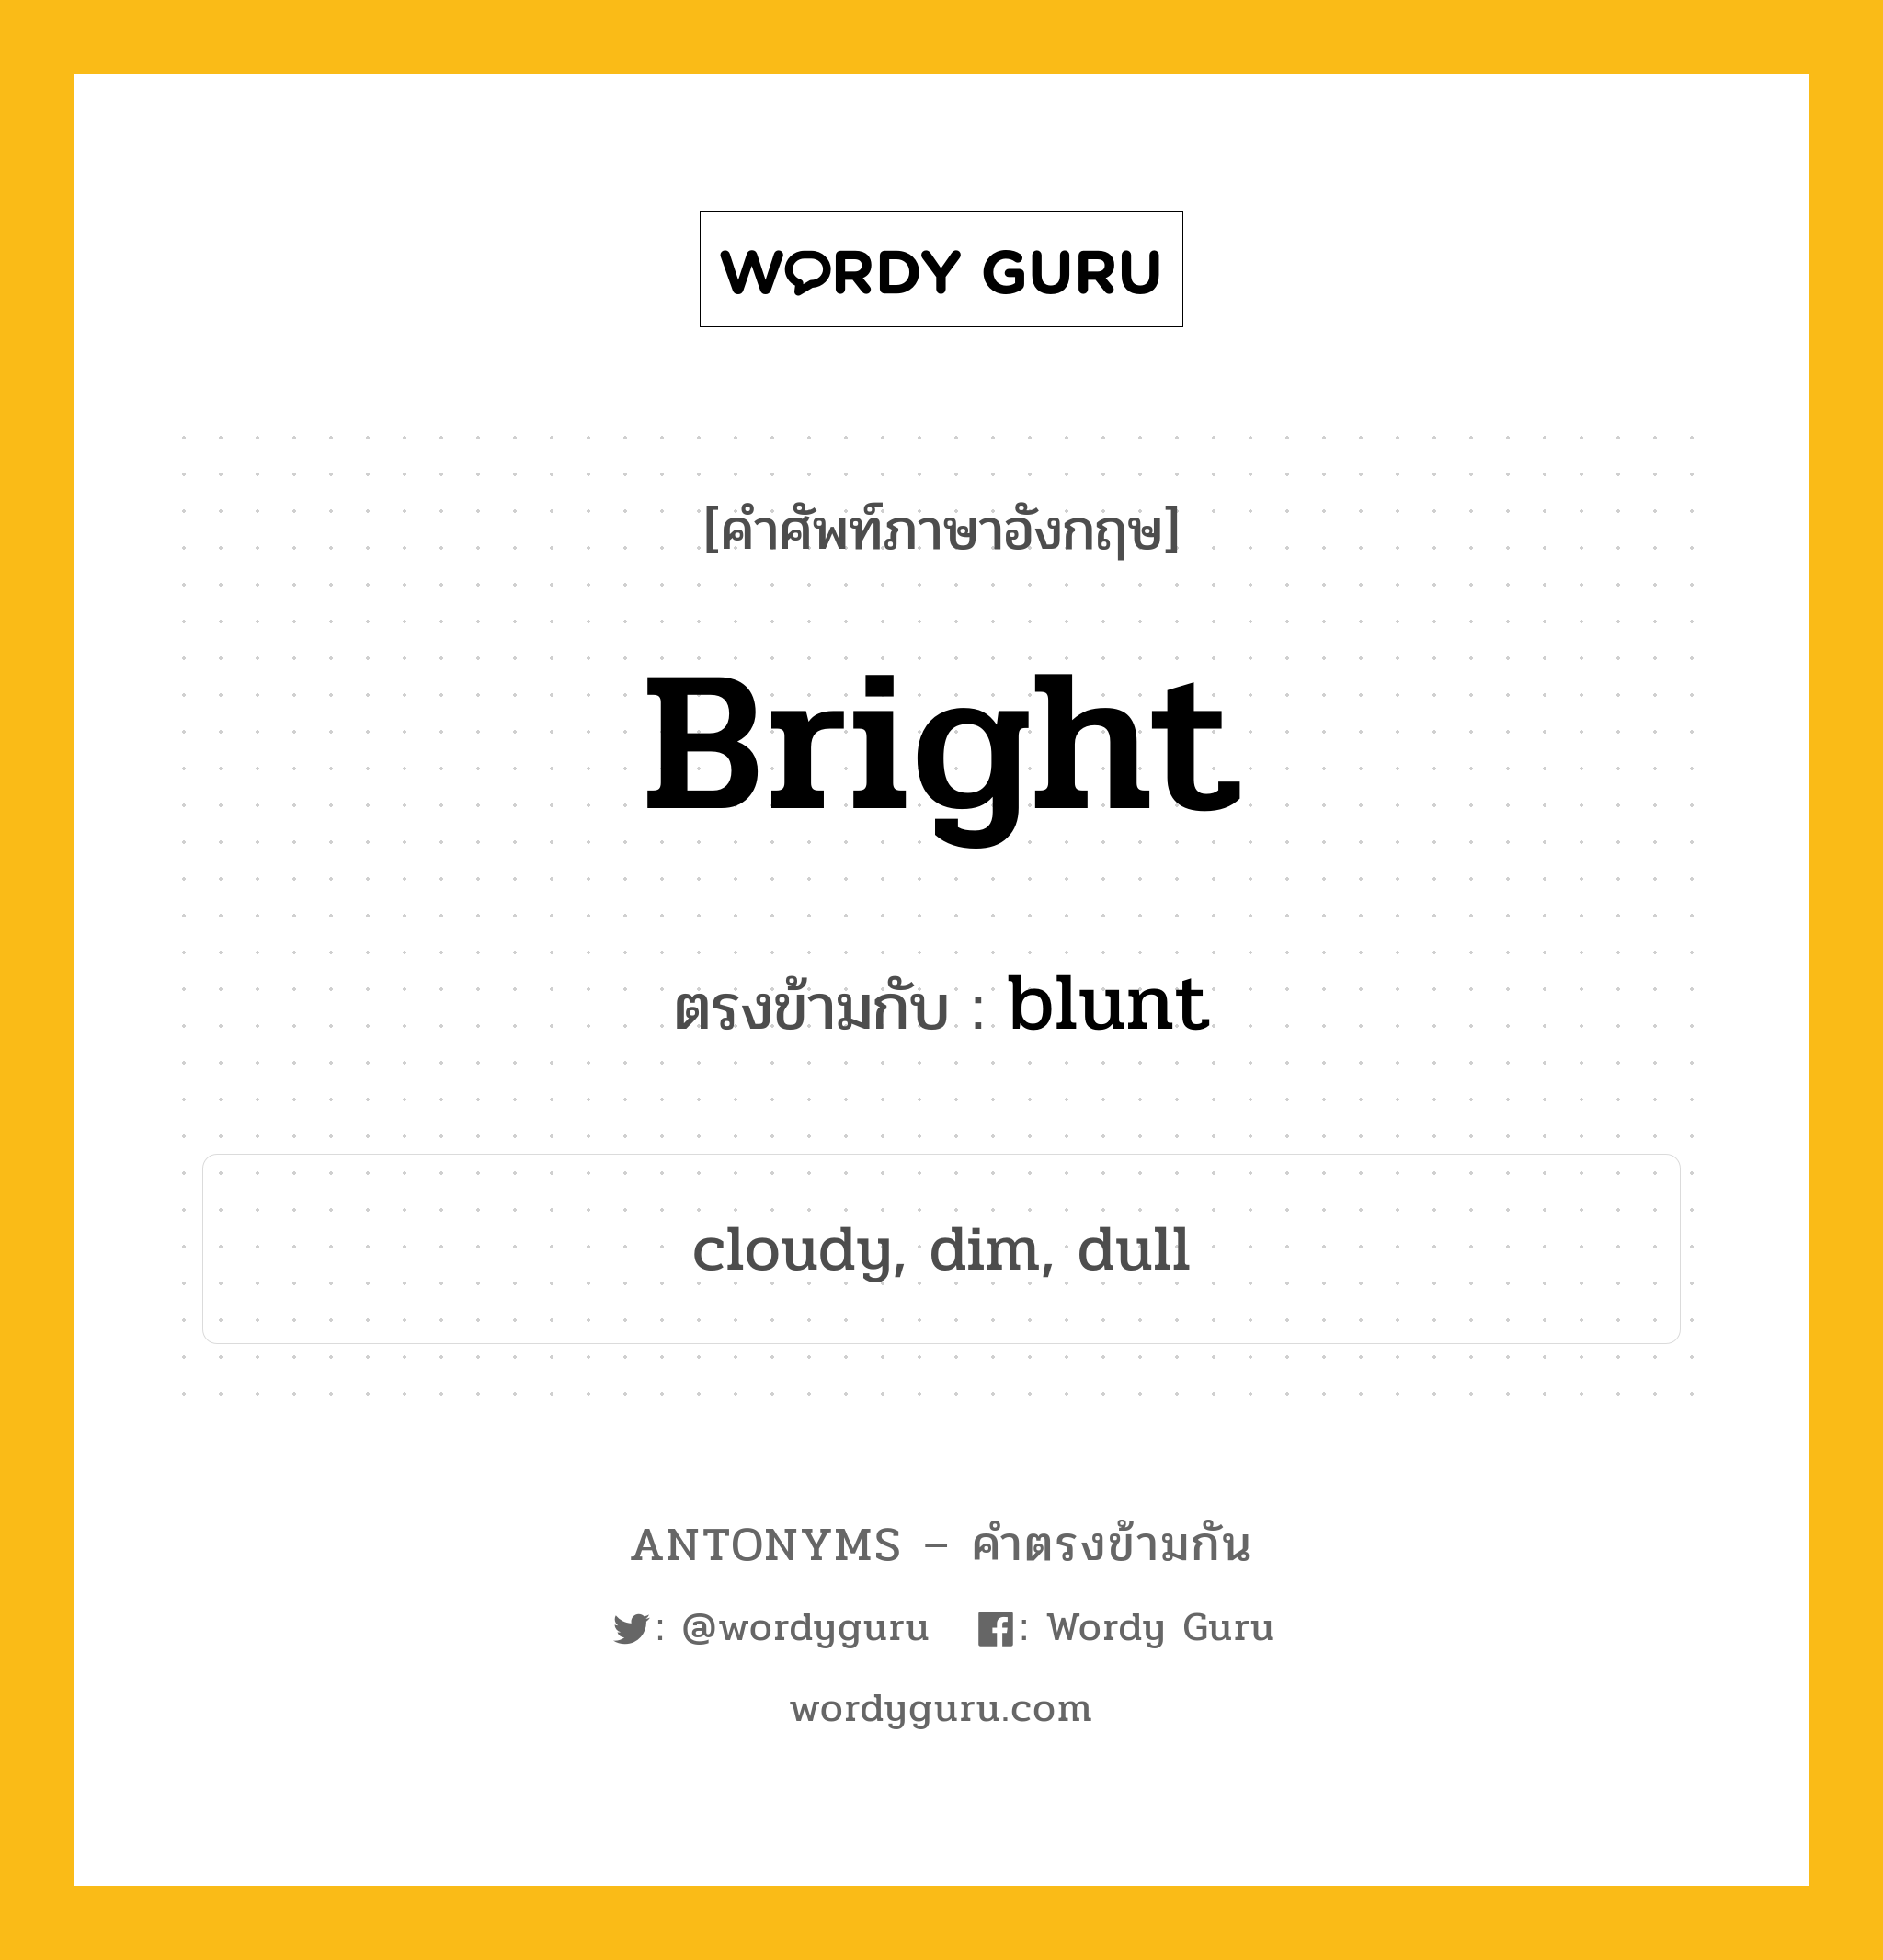 bright เป็นคำตรงข้ามกับคำไหนบ้าง?, คำศัพท์ภาษาอังกฤษ bright ตรงข้ามกับ blunt หมวด blunt